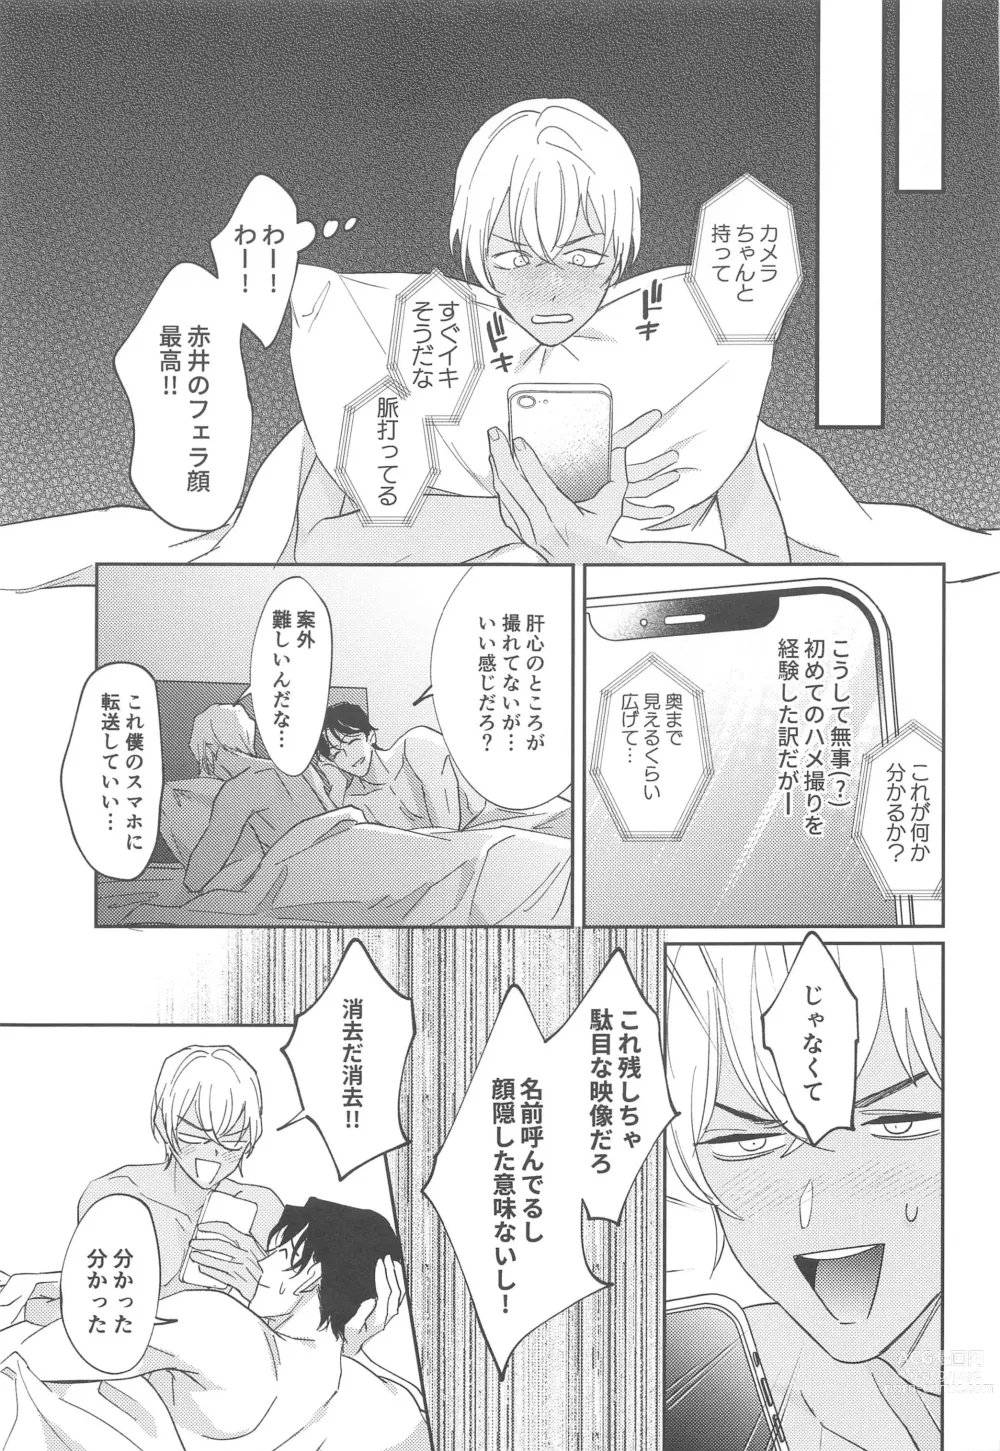 Page 34 of doujinshi REC